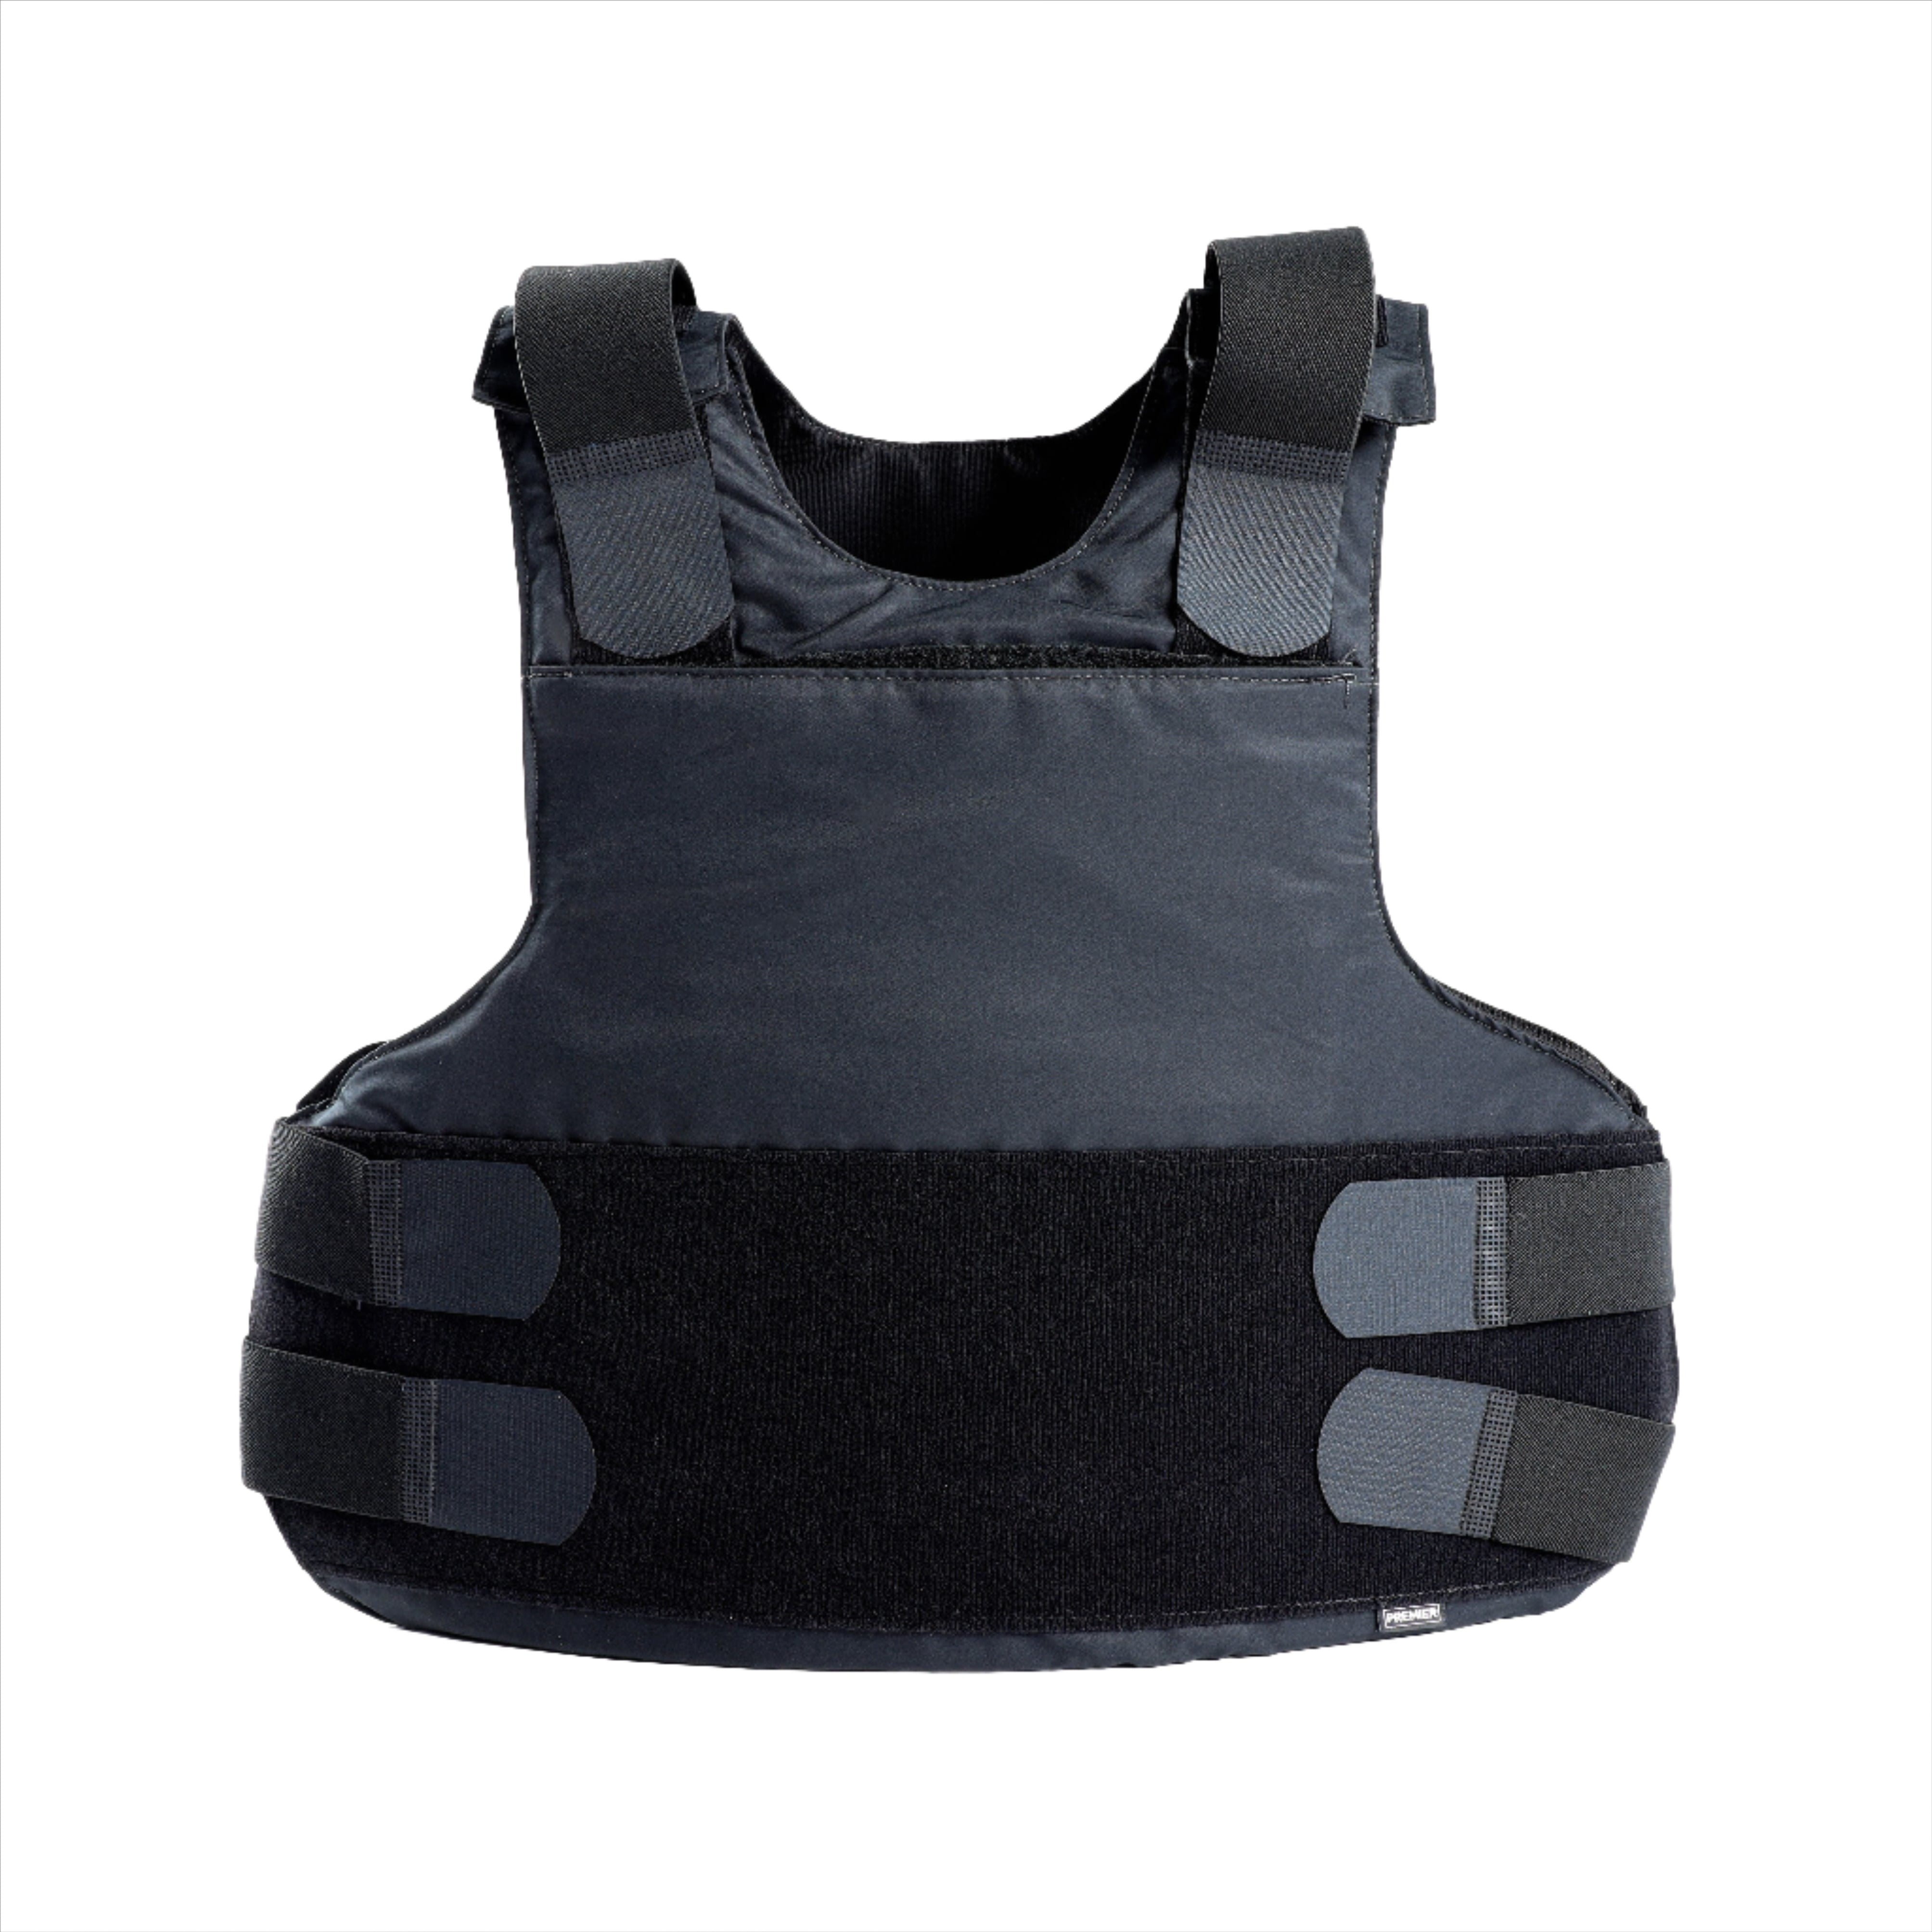 Hybrid Concealment Vest: Exceptional Protection, Lightweight Design ...